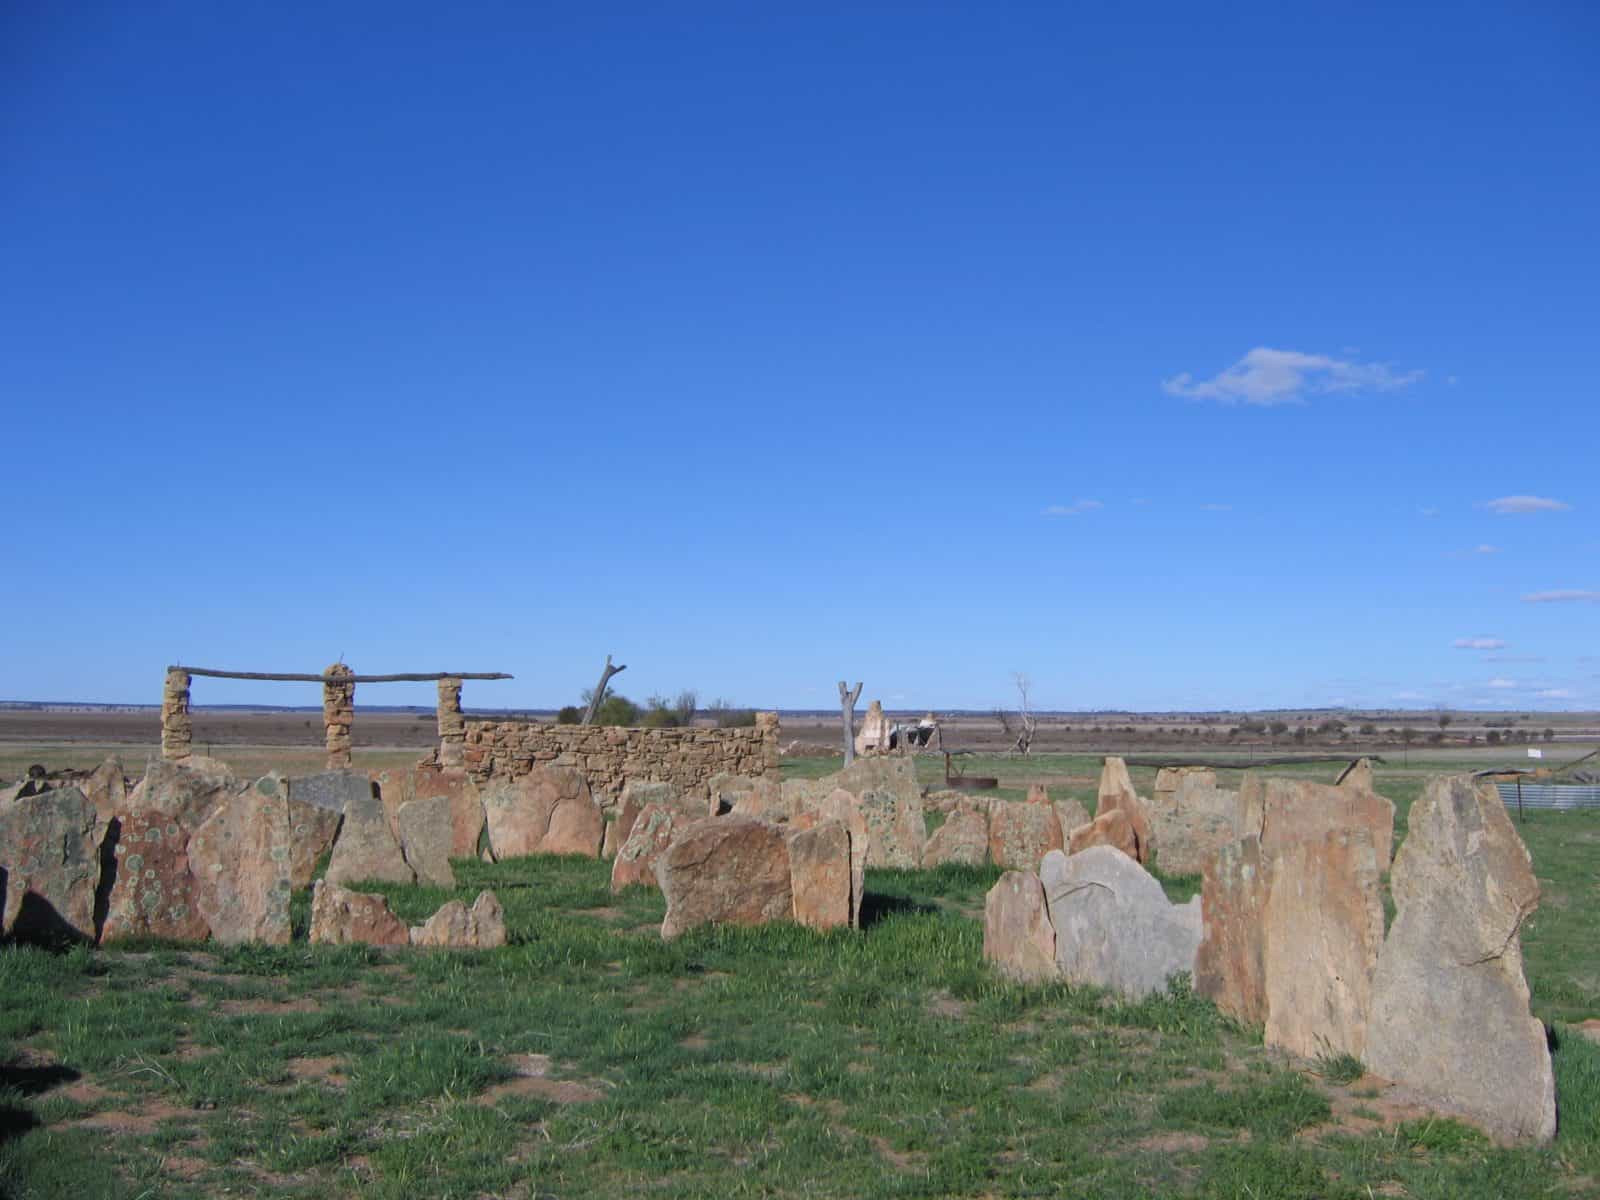 Pergandes Sheepyards, Bencubbin, Western Australia